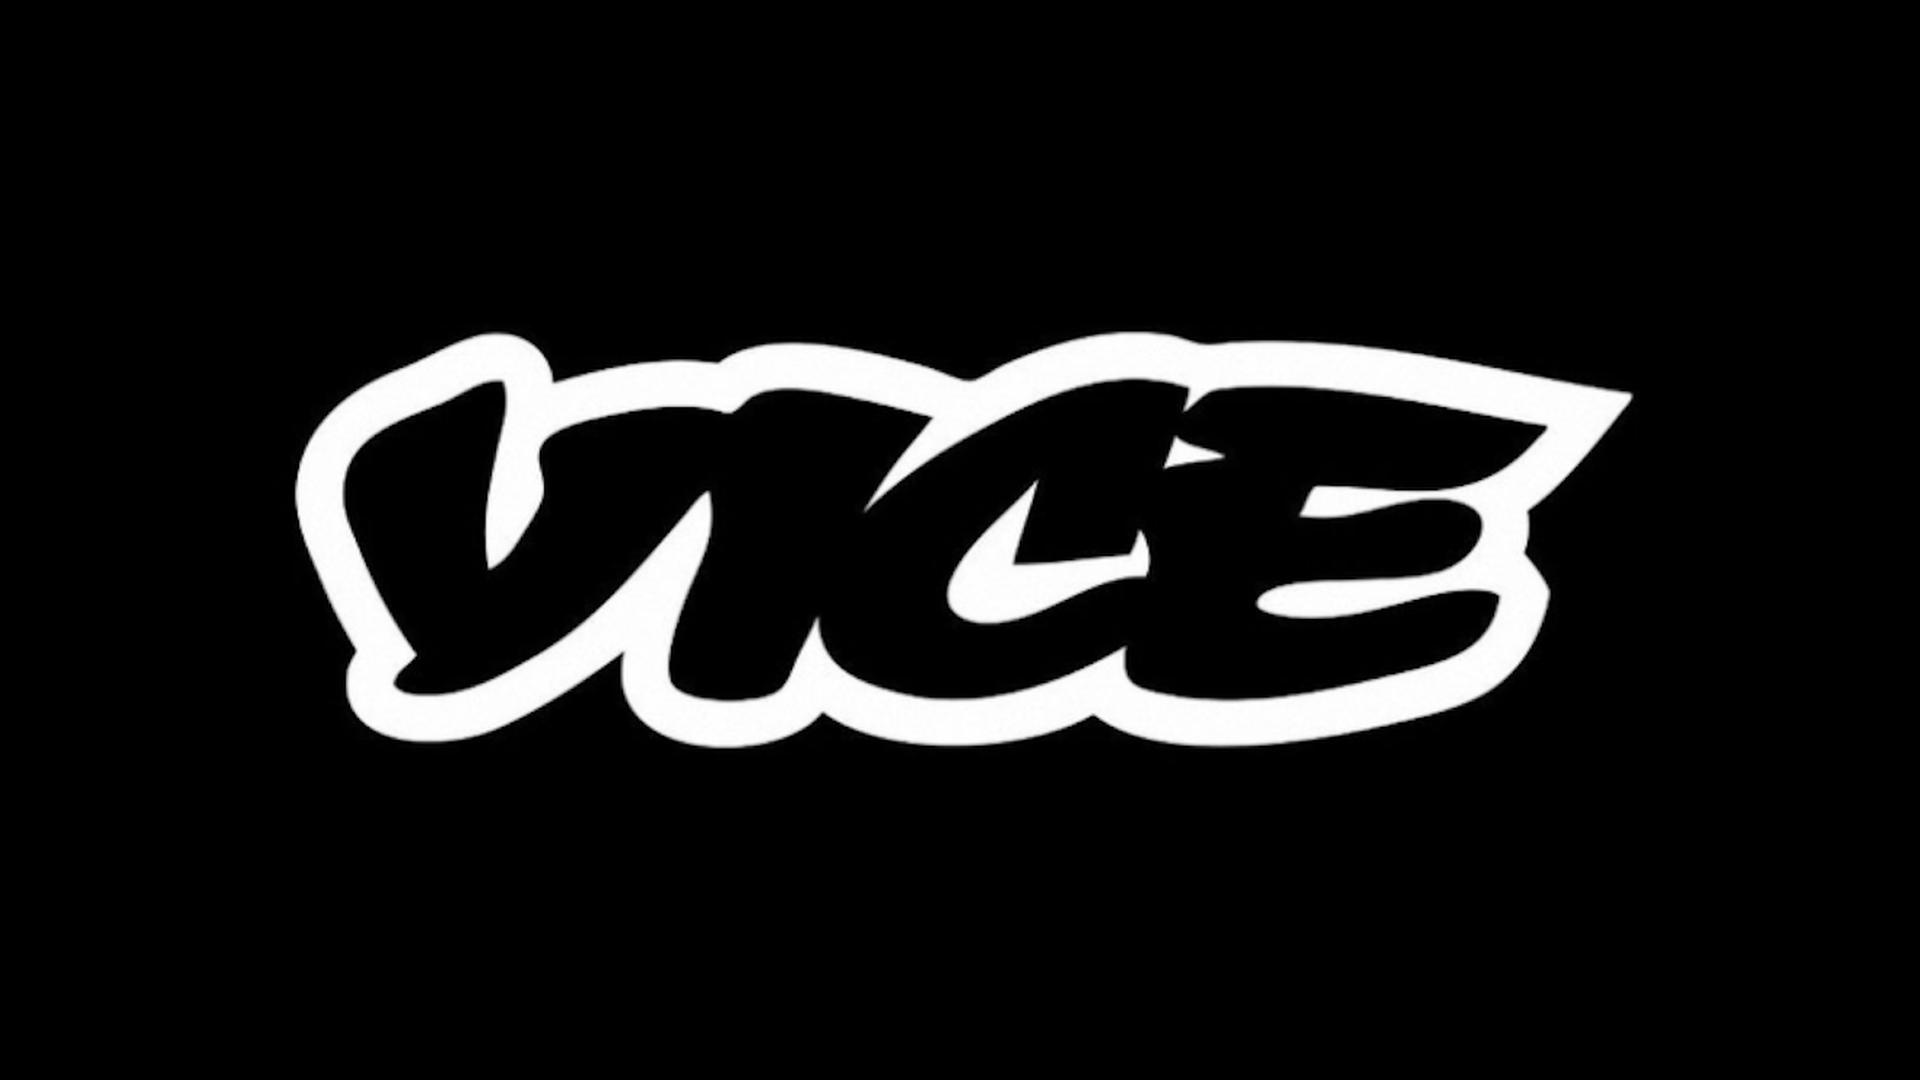 Vice's logo.